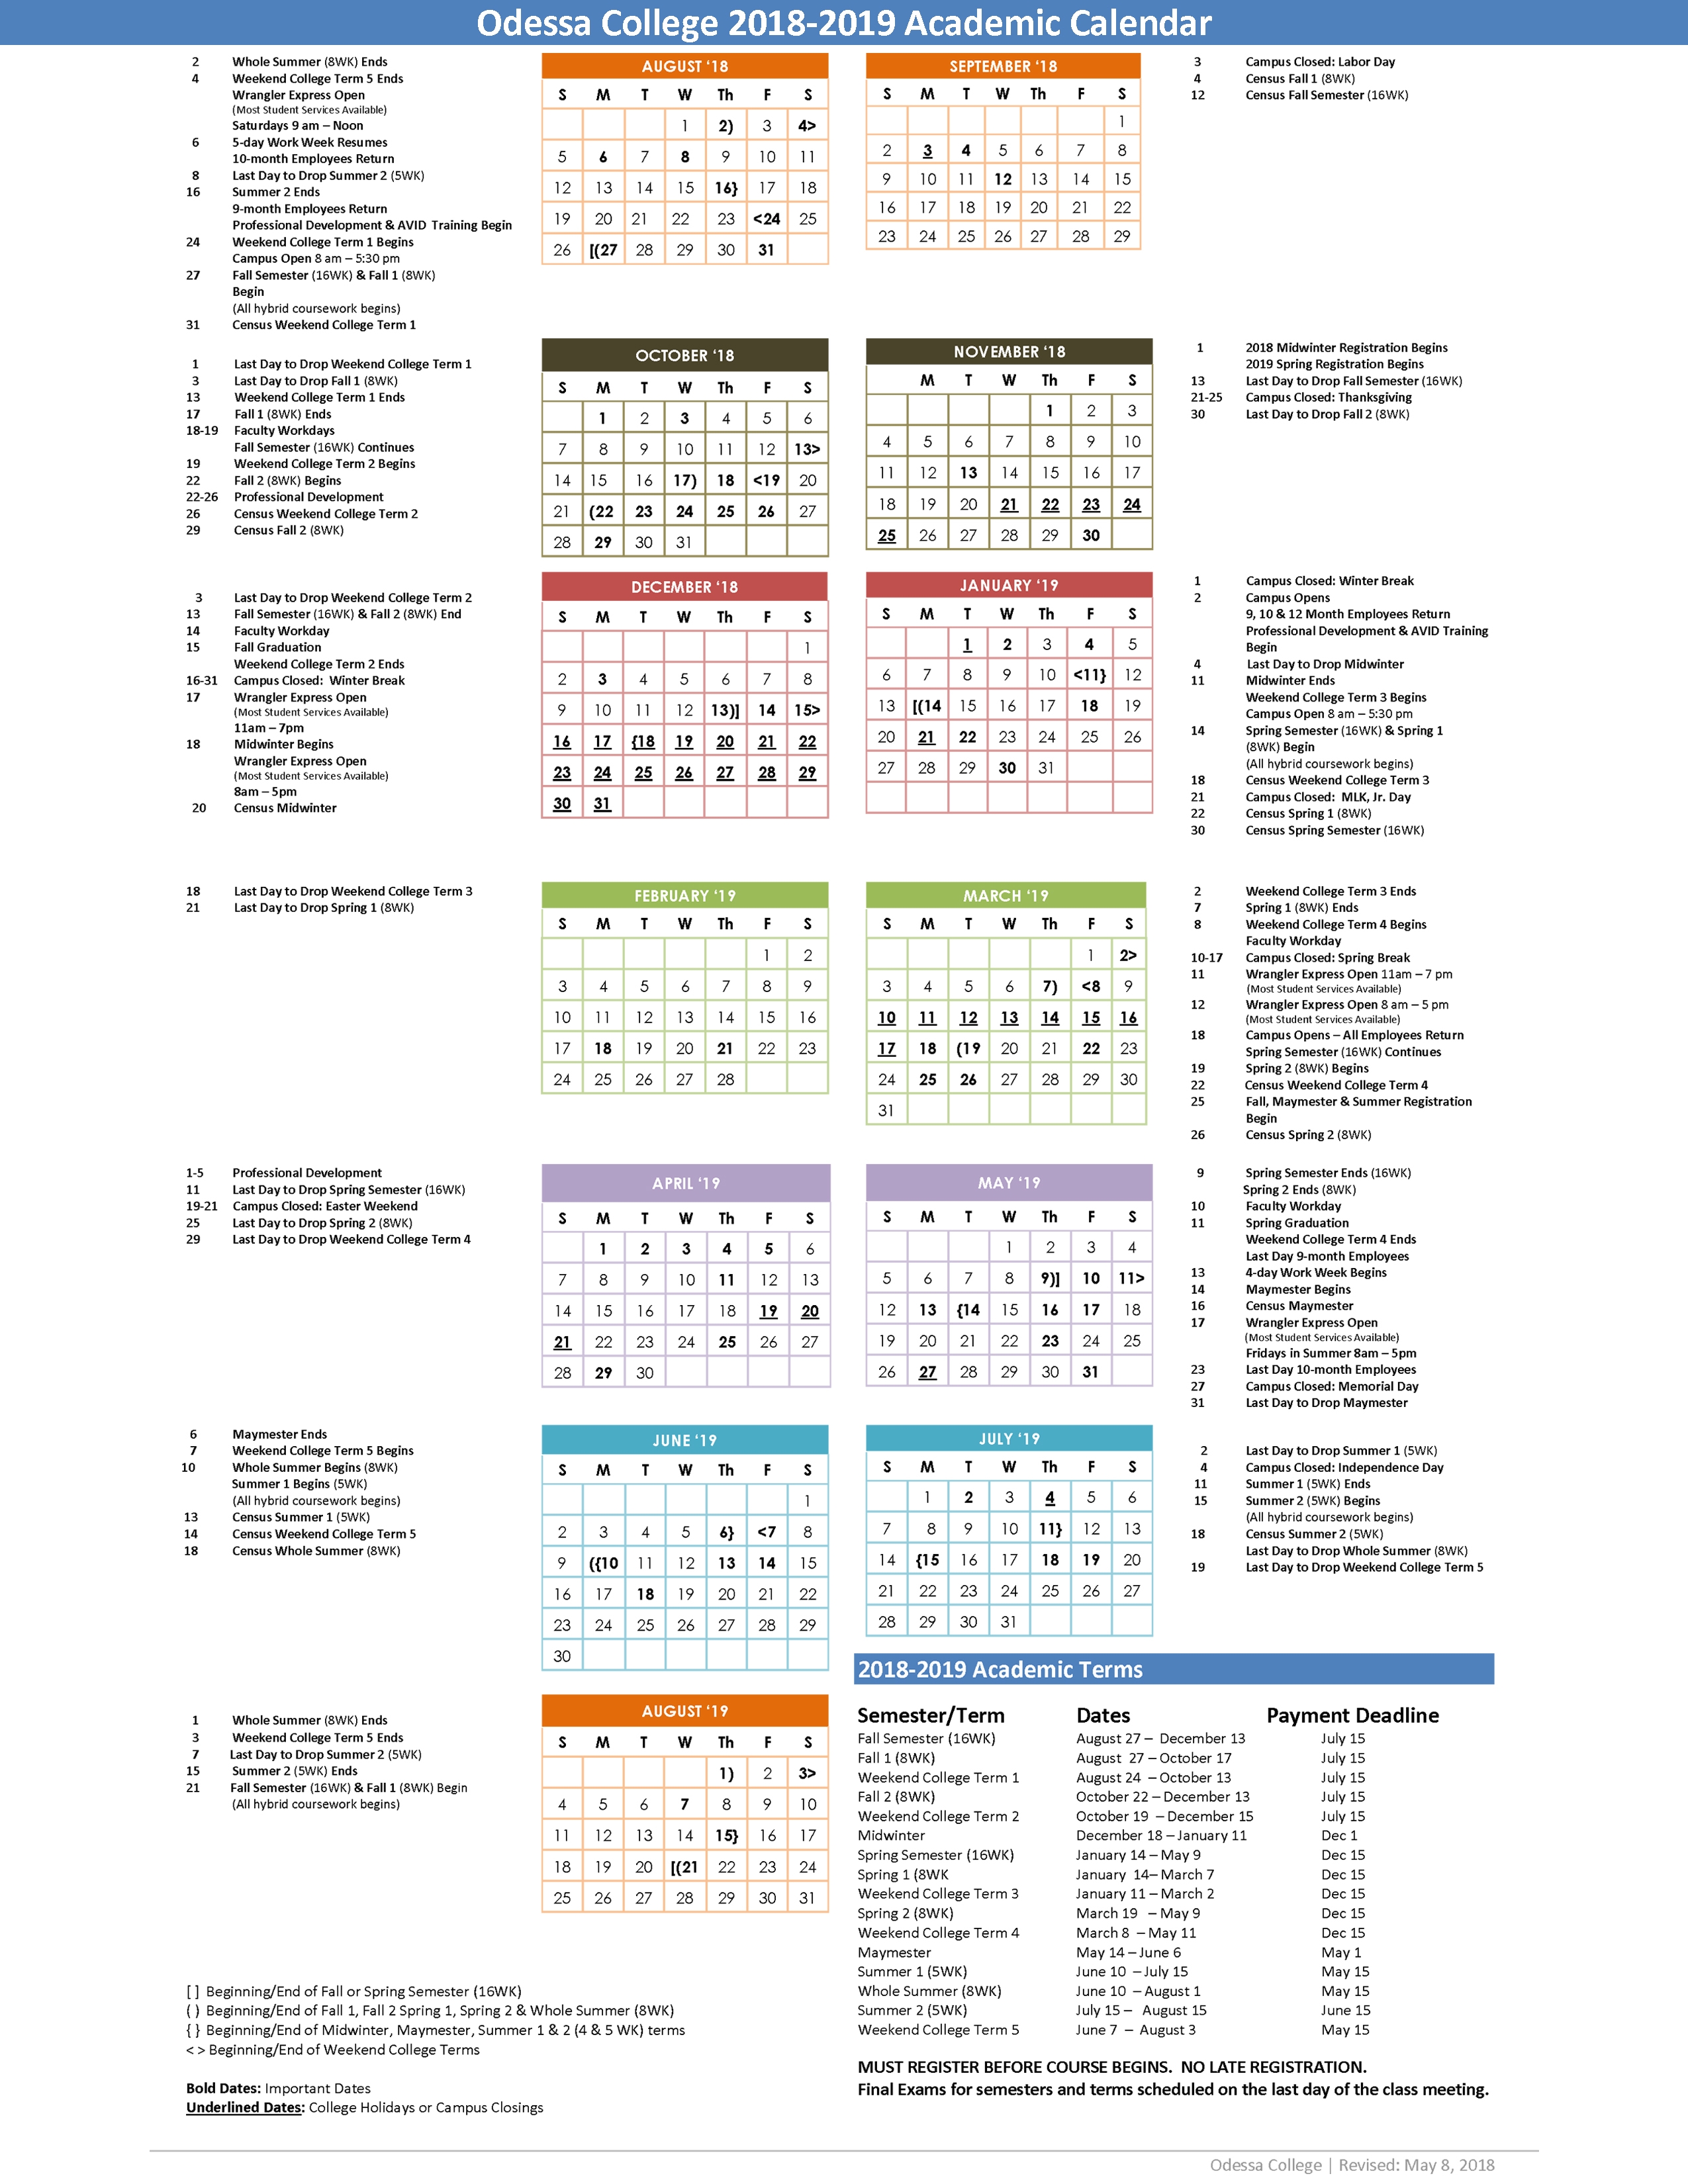 Pace University Calendar Qualads